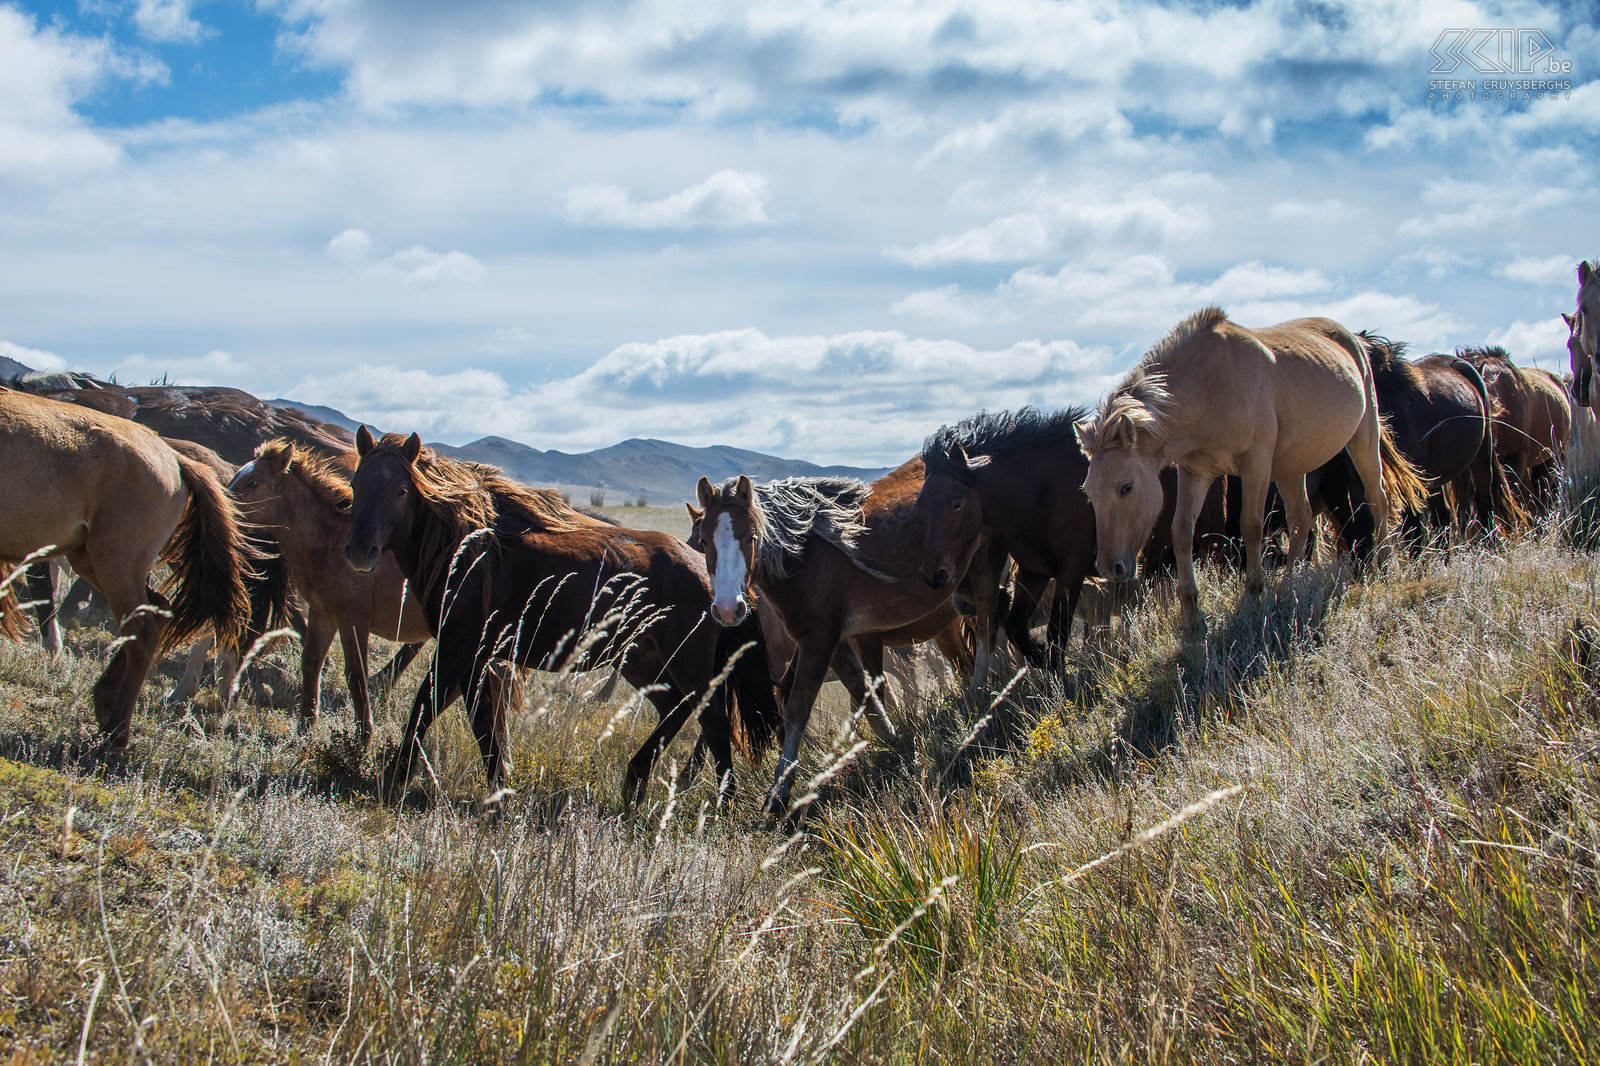 Hustai - Herd of horses Large herd of horses on the Mongolian steppe. Stefan Cruysberghs